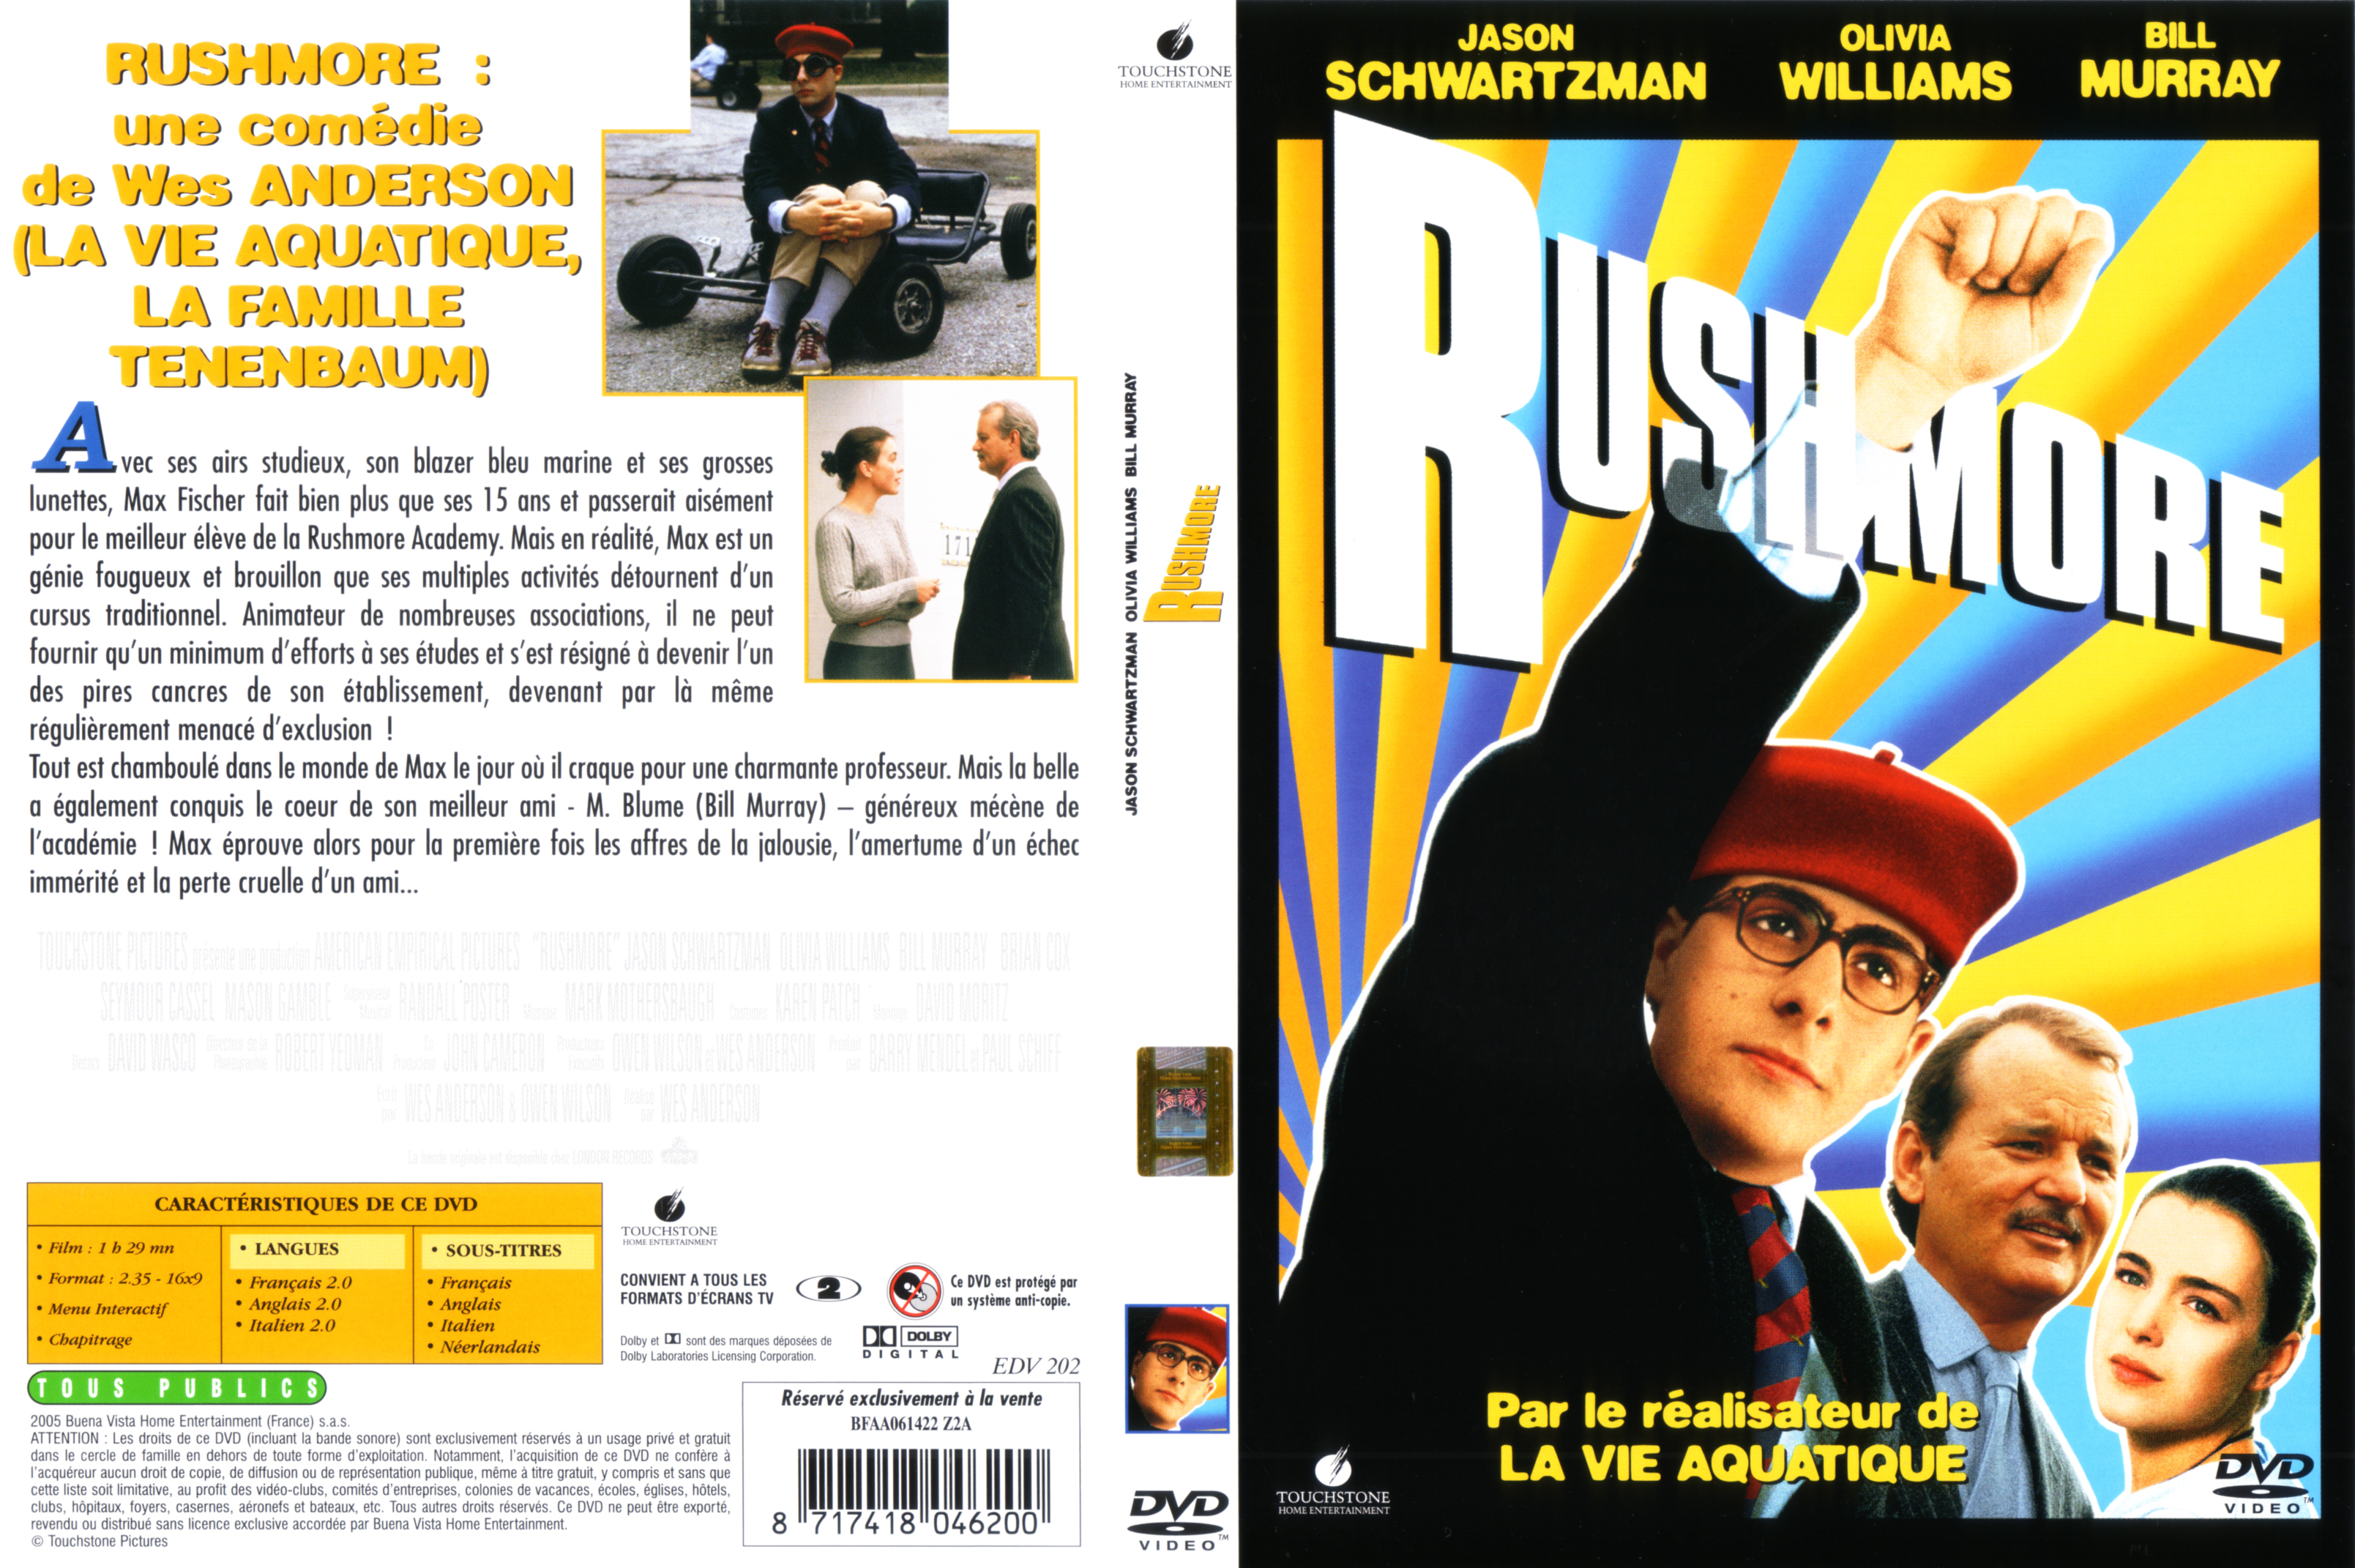 Jaquette DVD Rushmore